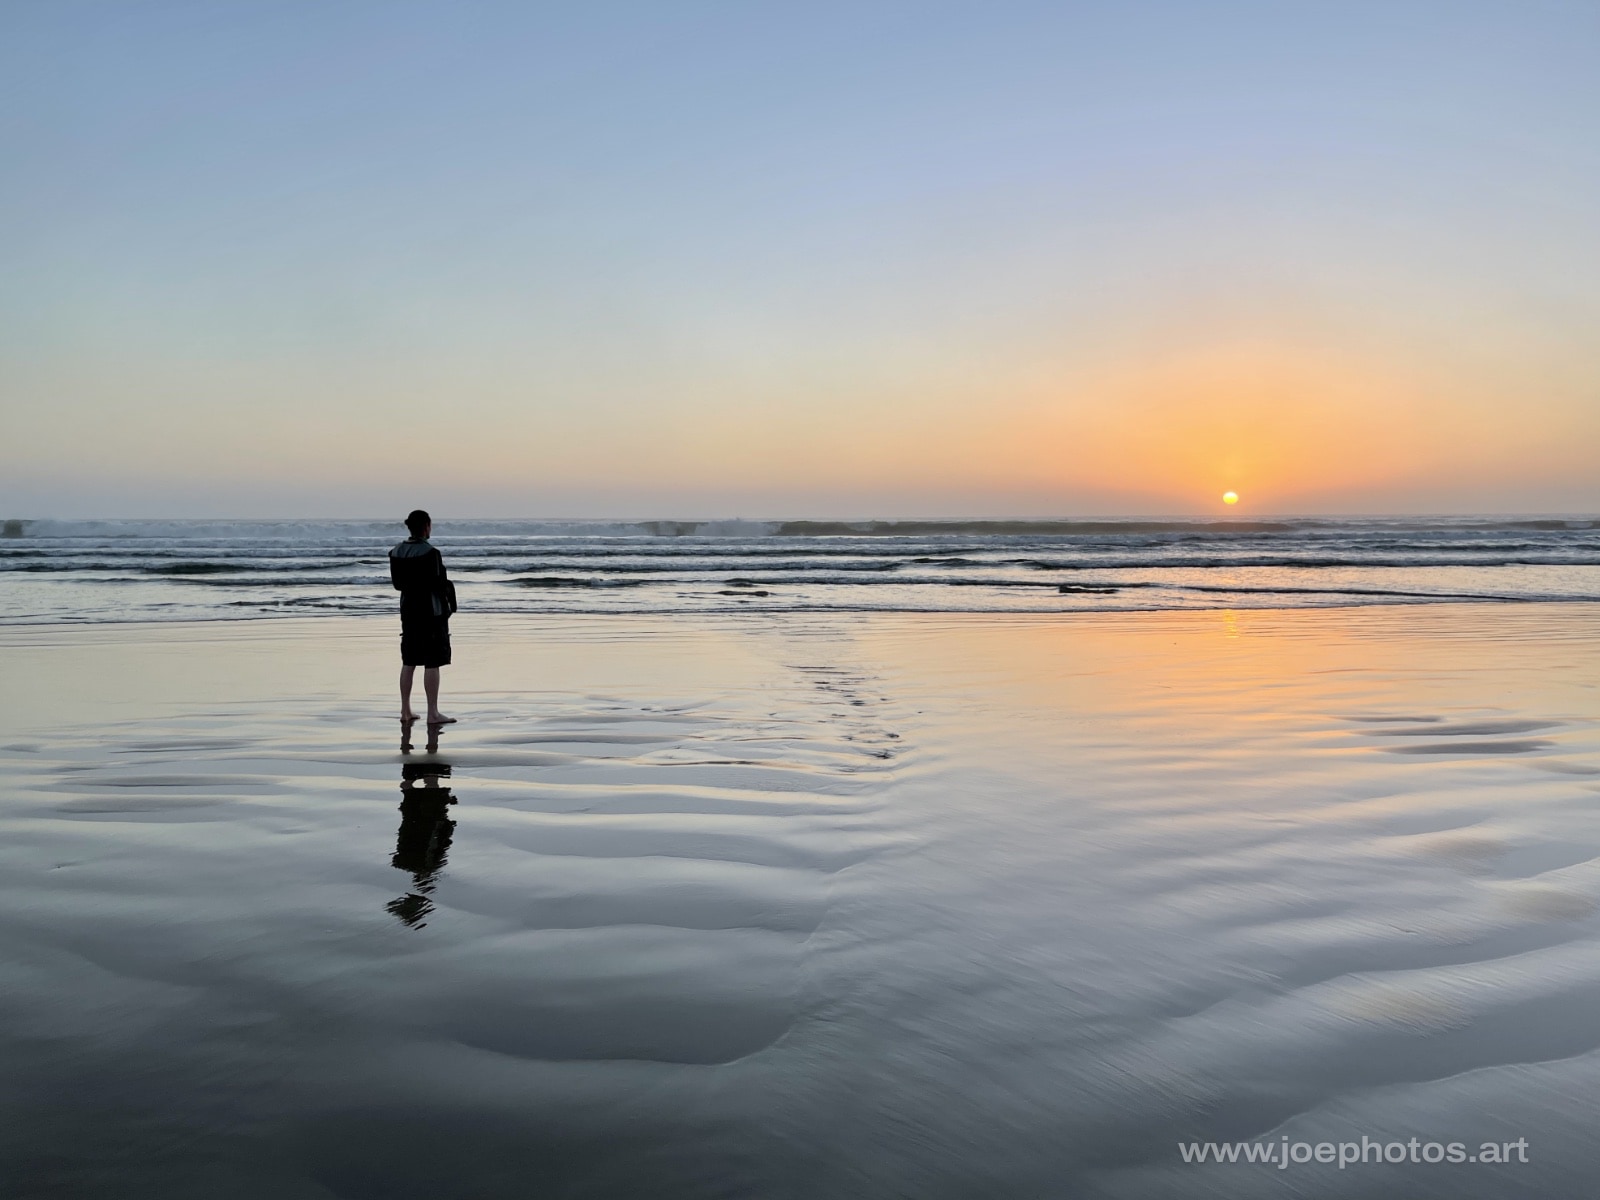 Man at reflective ocean sunset.